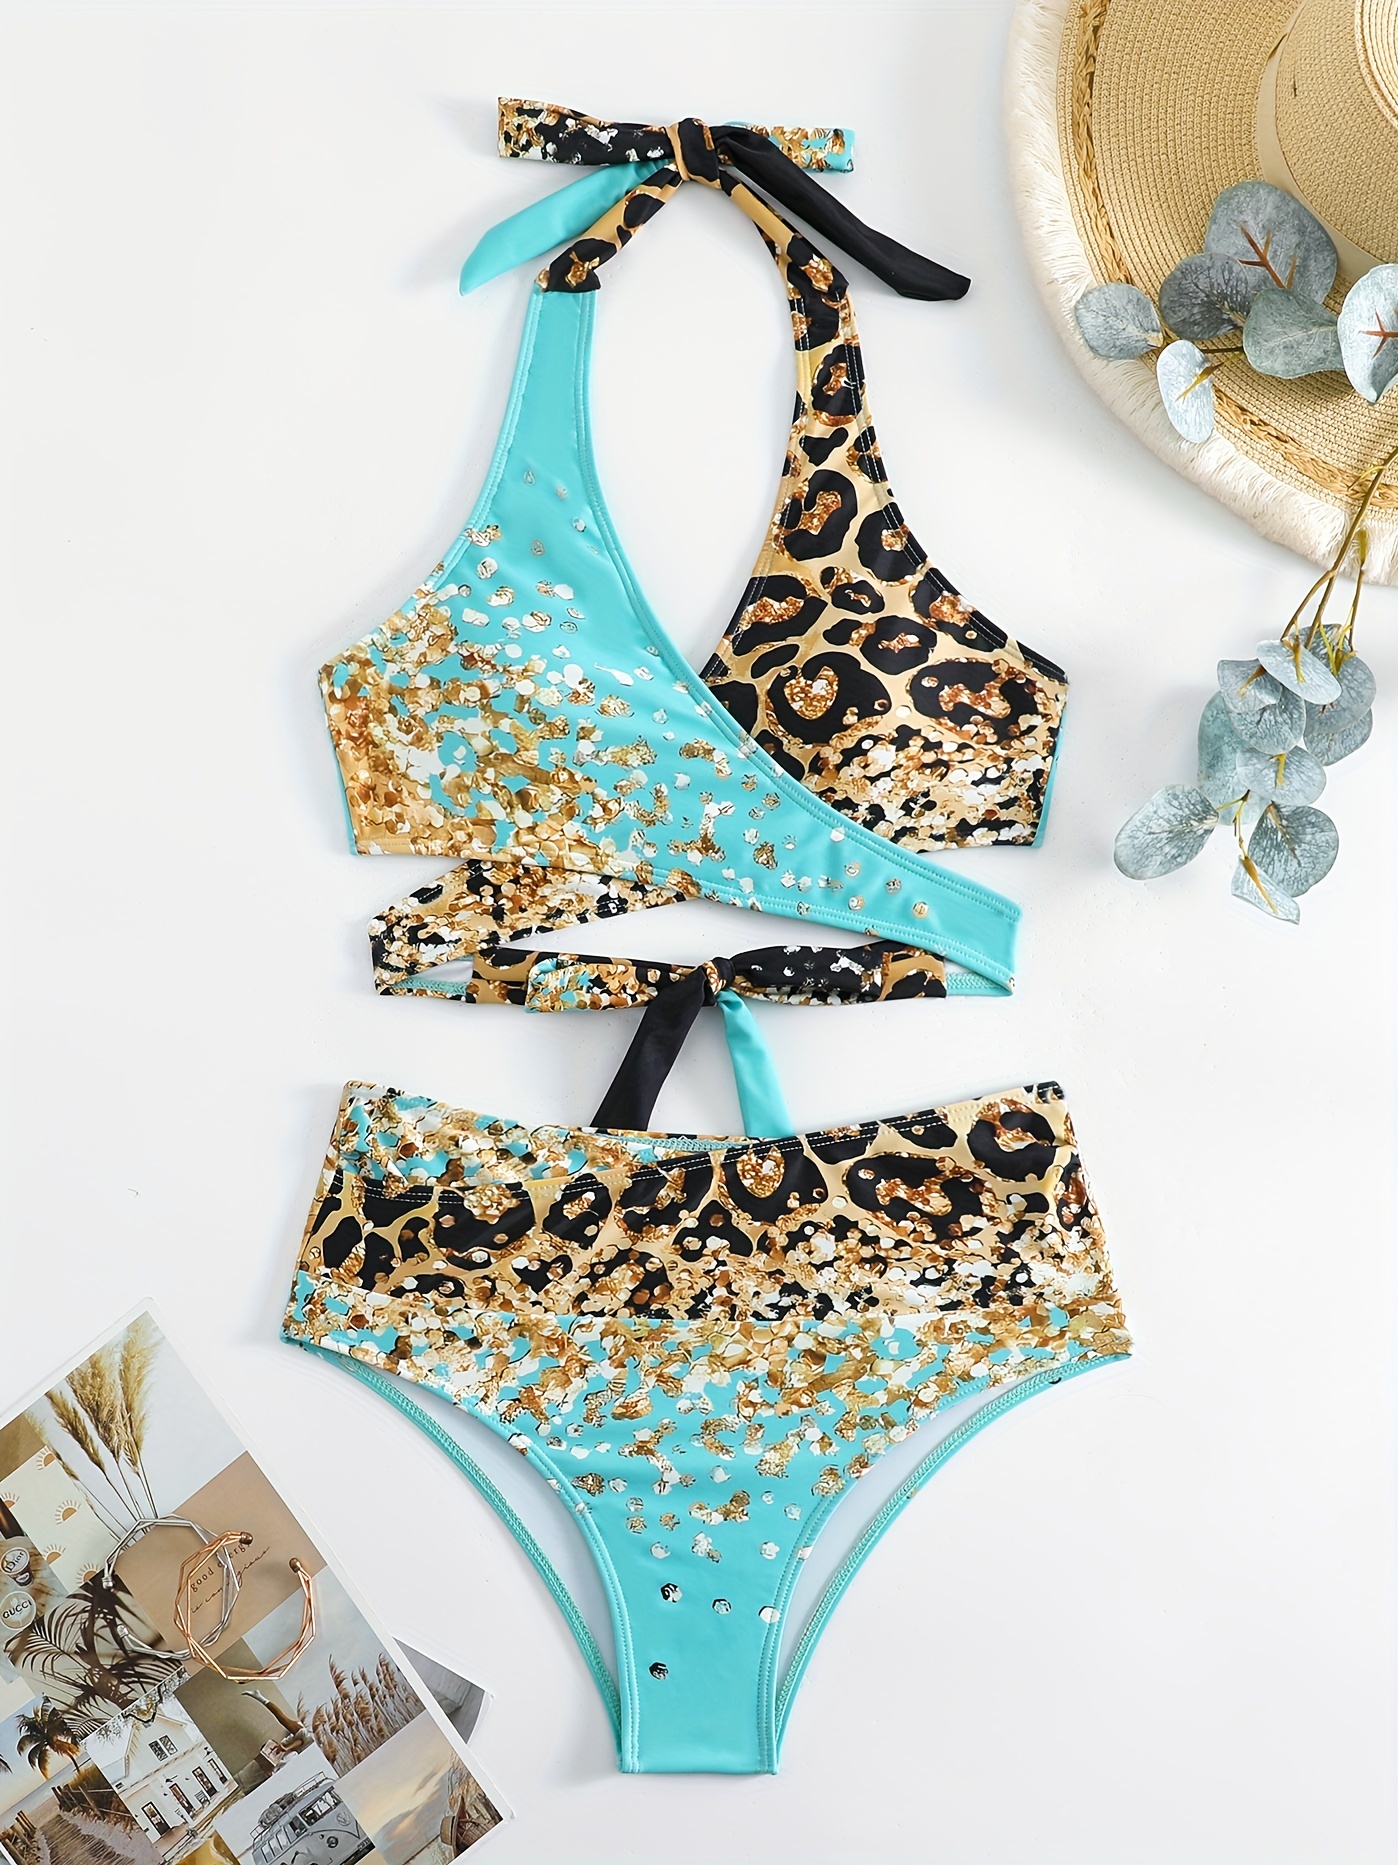 Leopard Foil Pamela One Piece Swimsuit